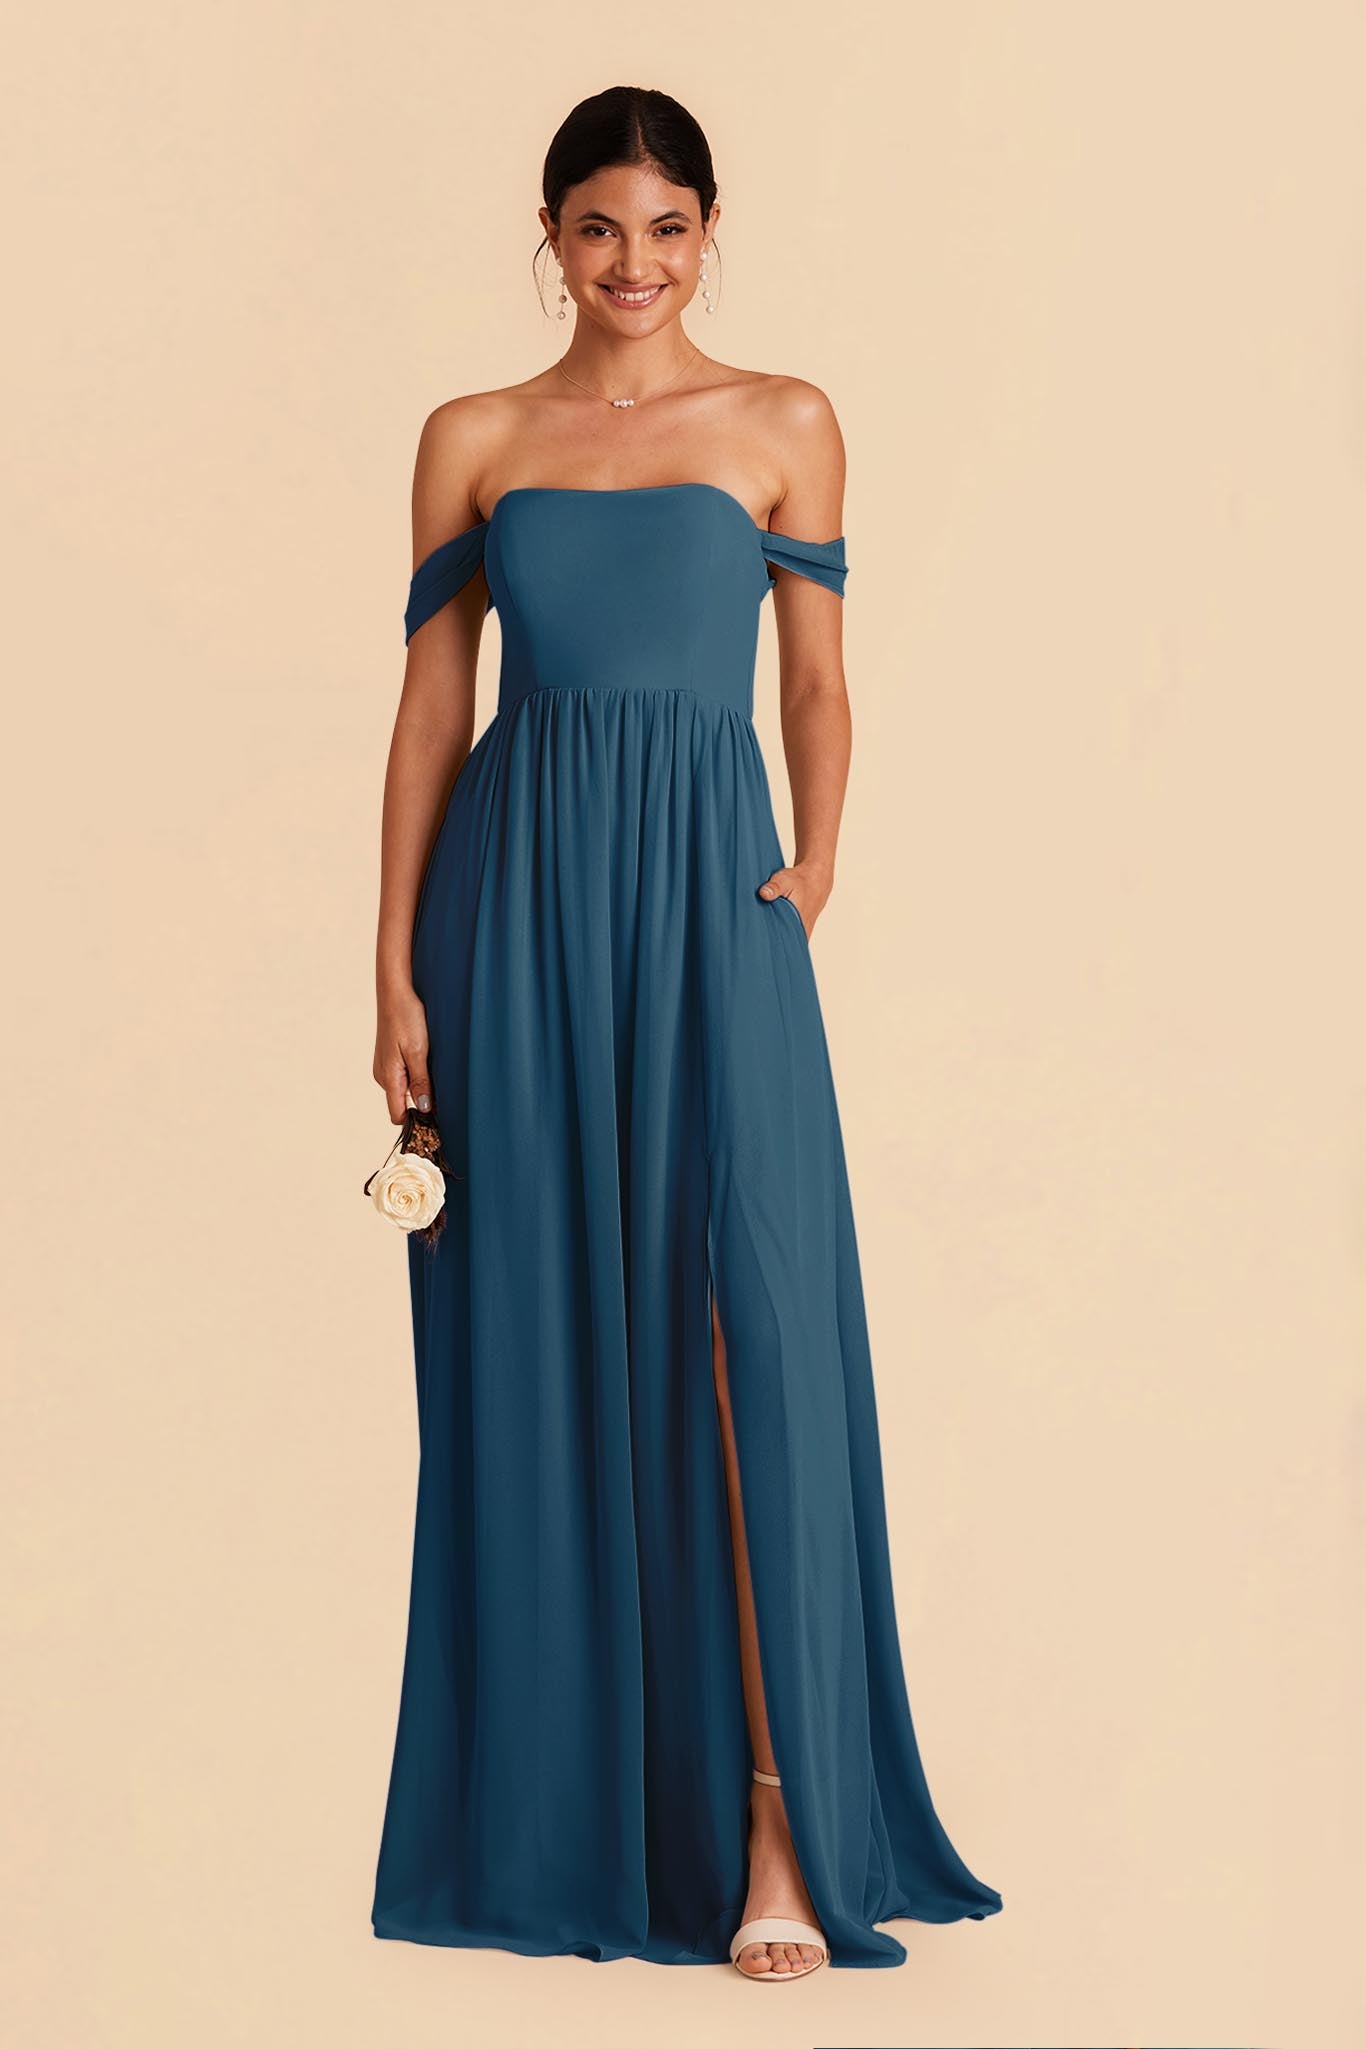 Ocean Blue August Convertible Dress by Birdy Grey